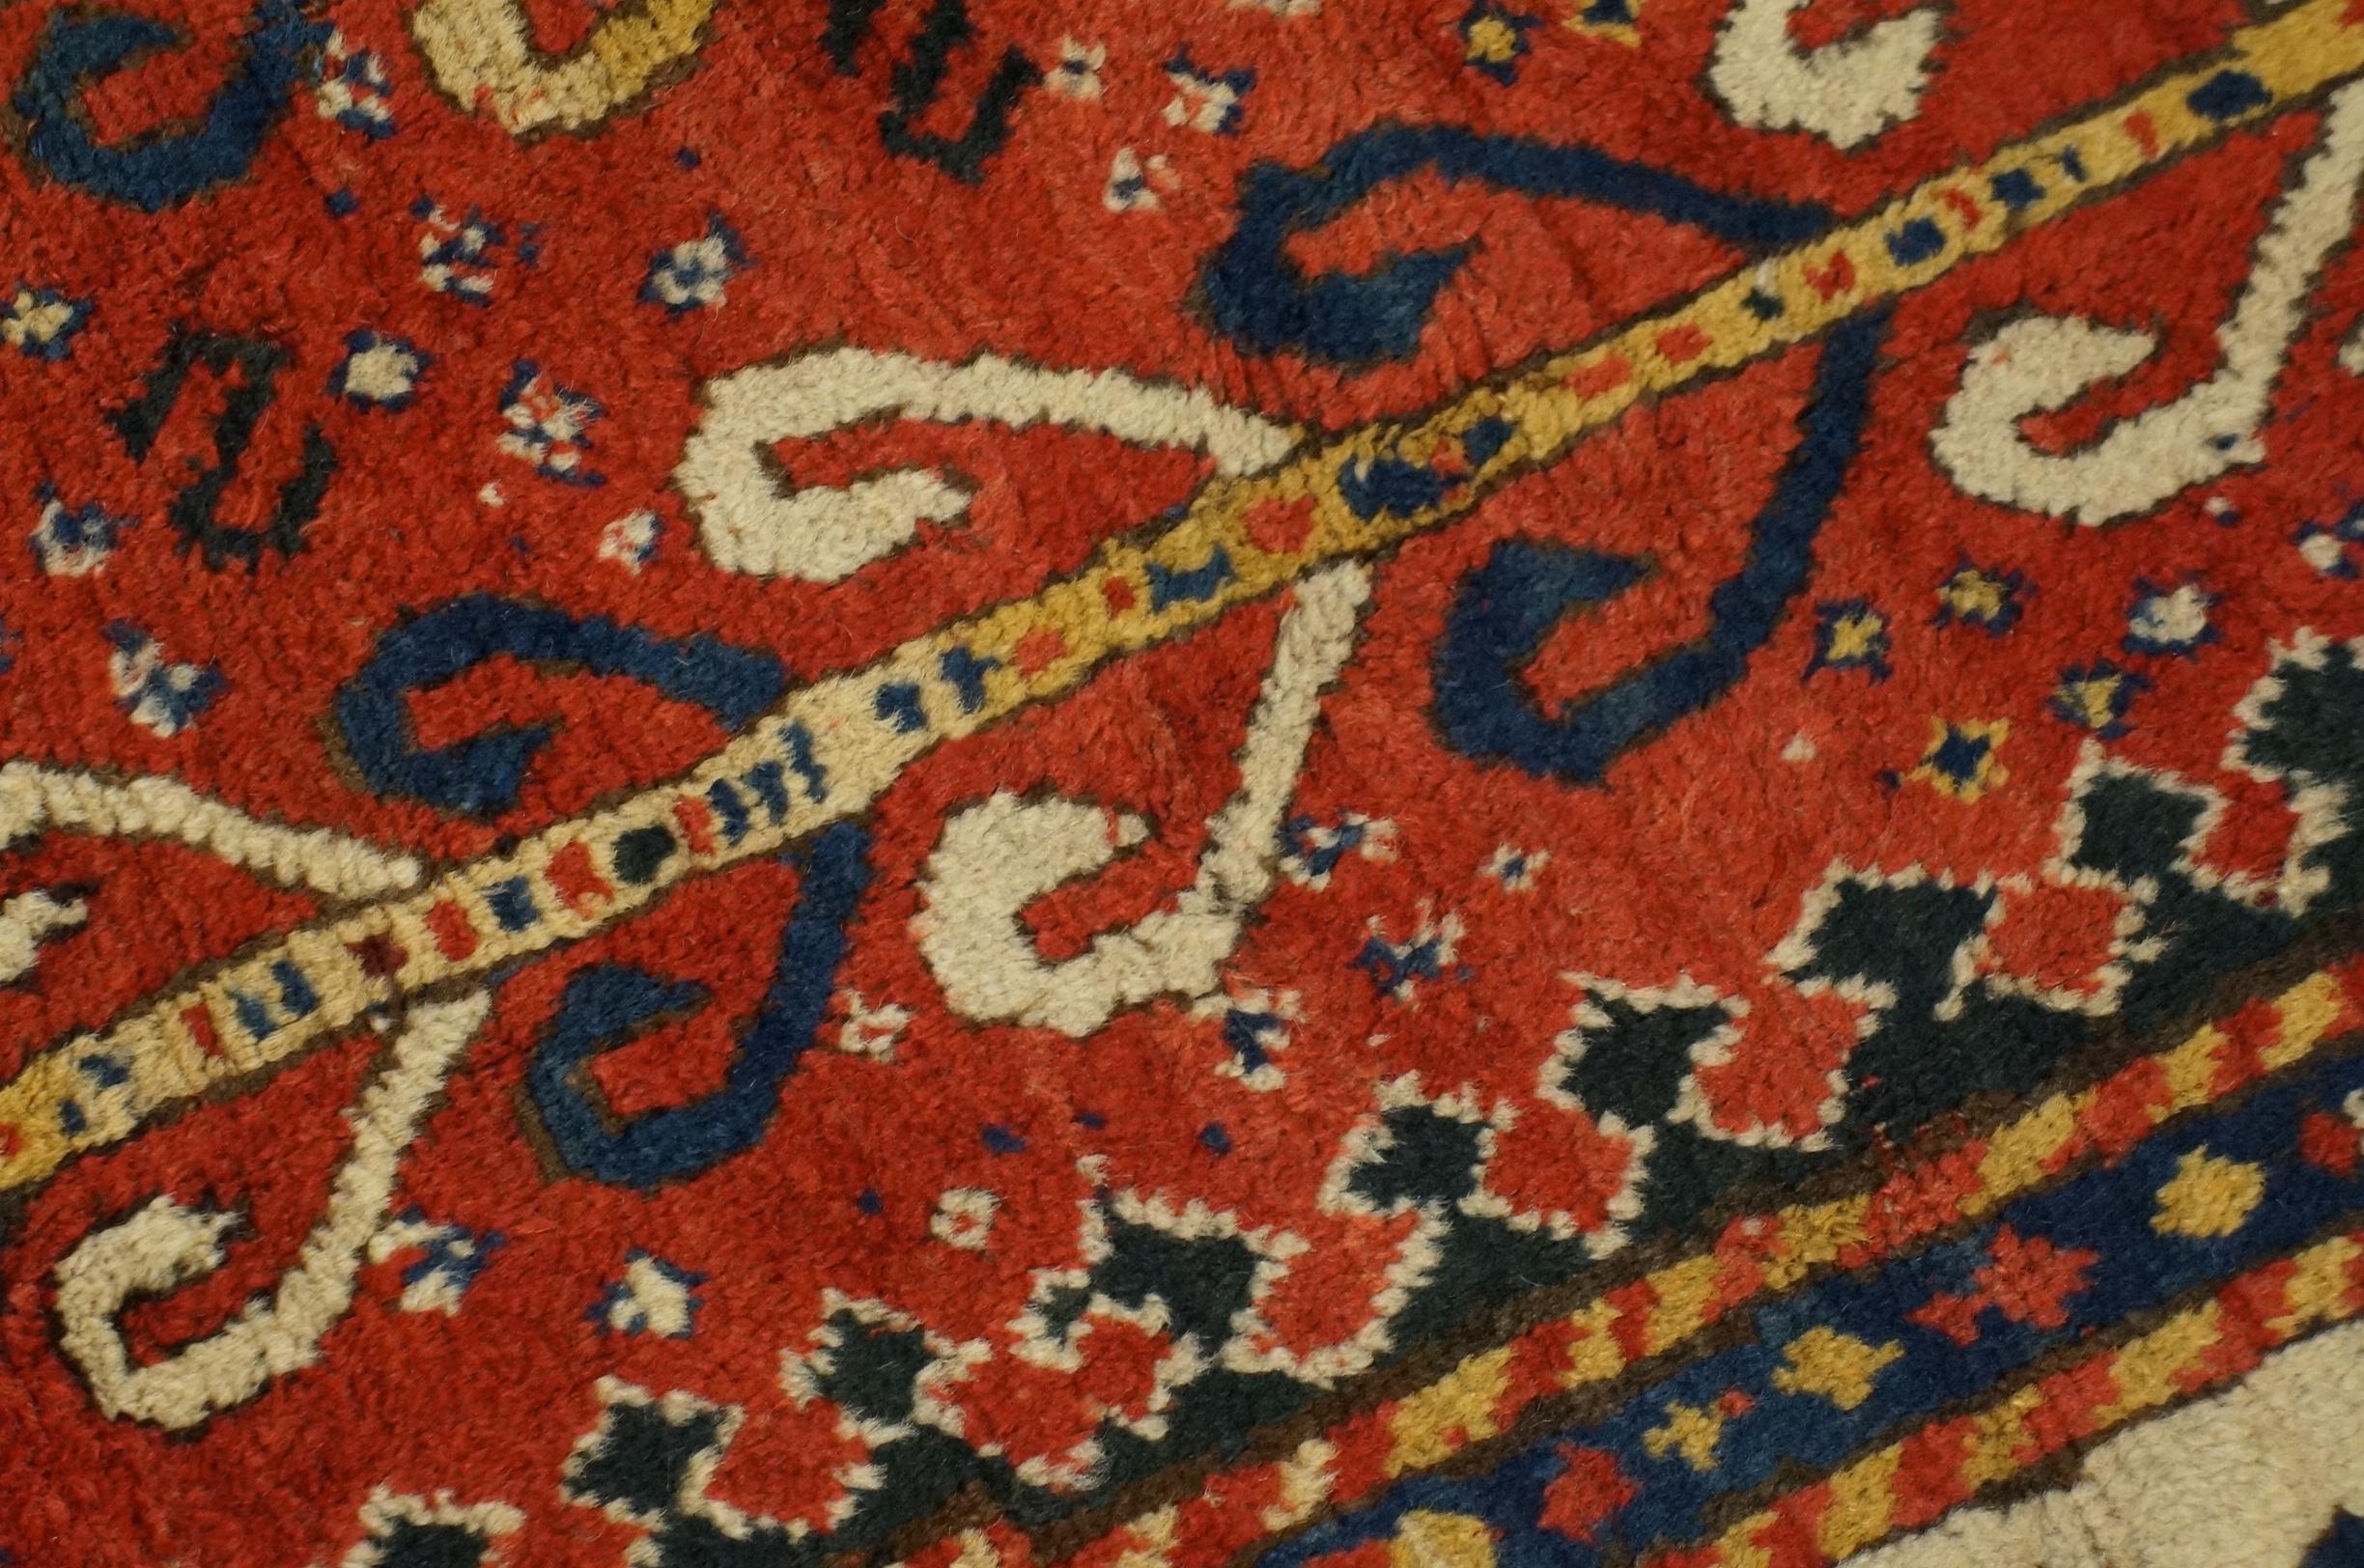 Kaukasischer Sewan-Kaukasischer Teppich aus dem 19. Jahrhundert ( 5'10